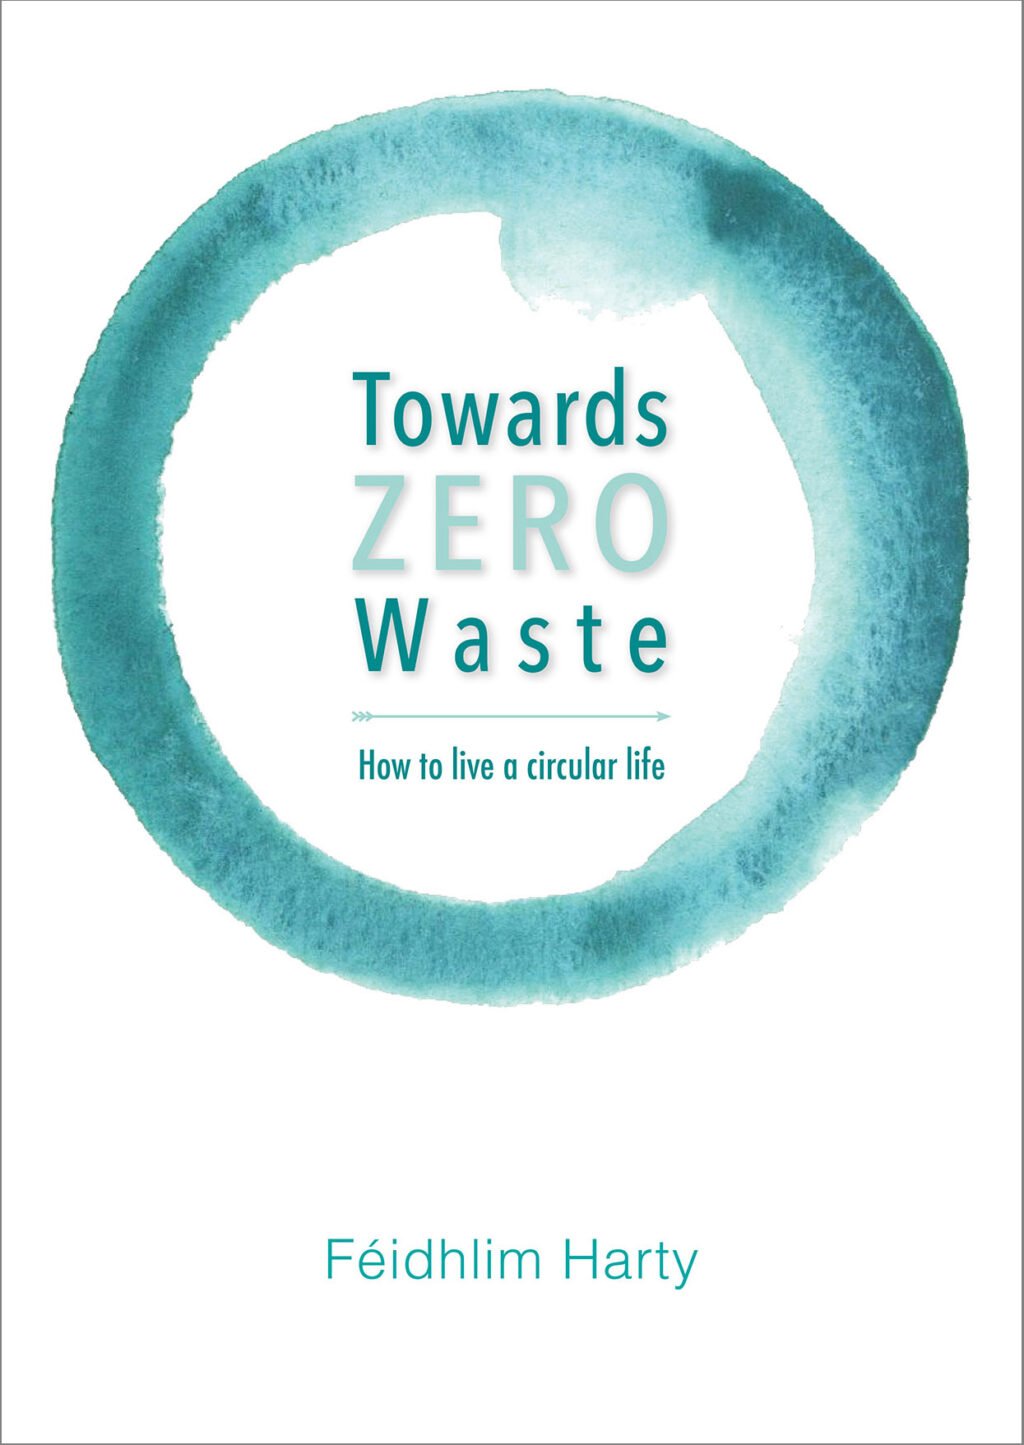 The Towards Zero Waste cover